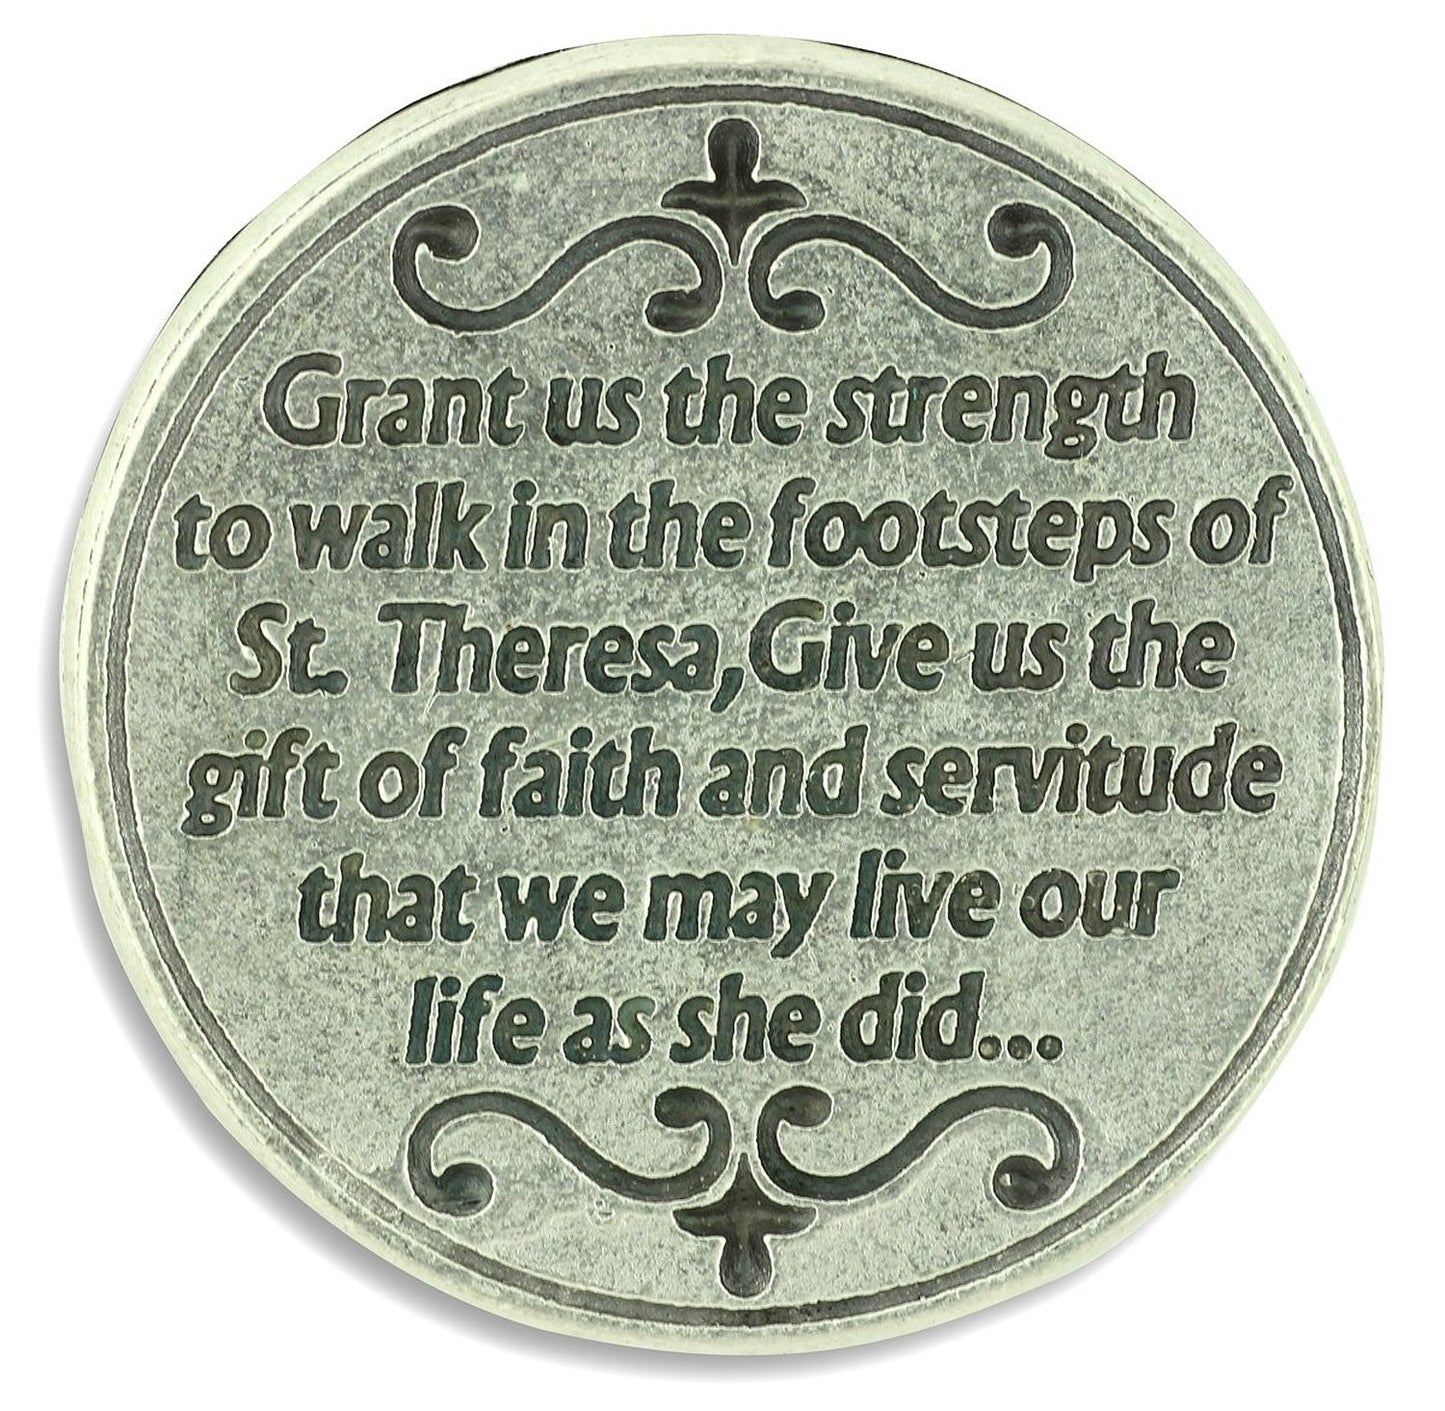 St. Theresa Pocket Token